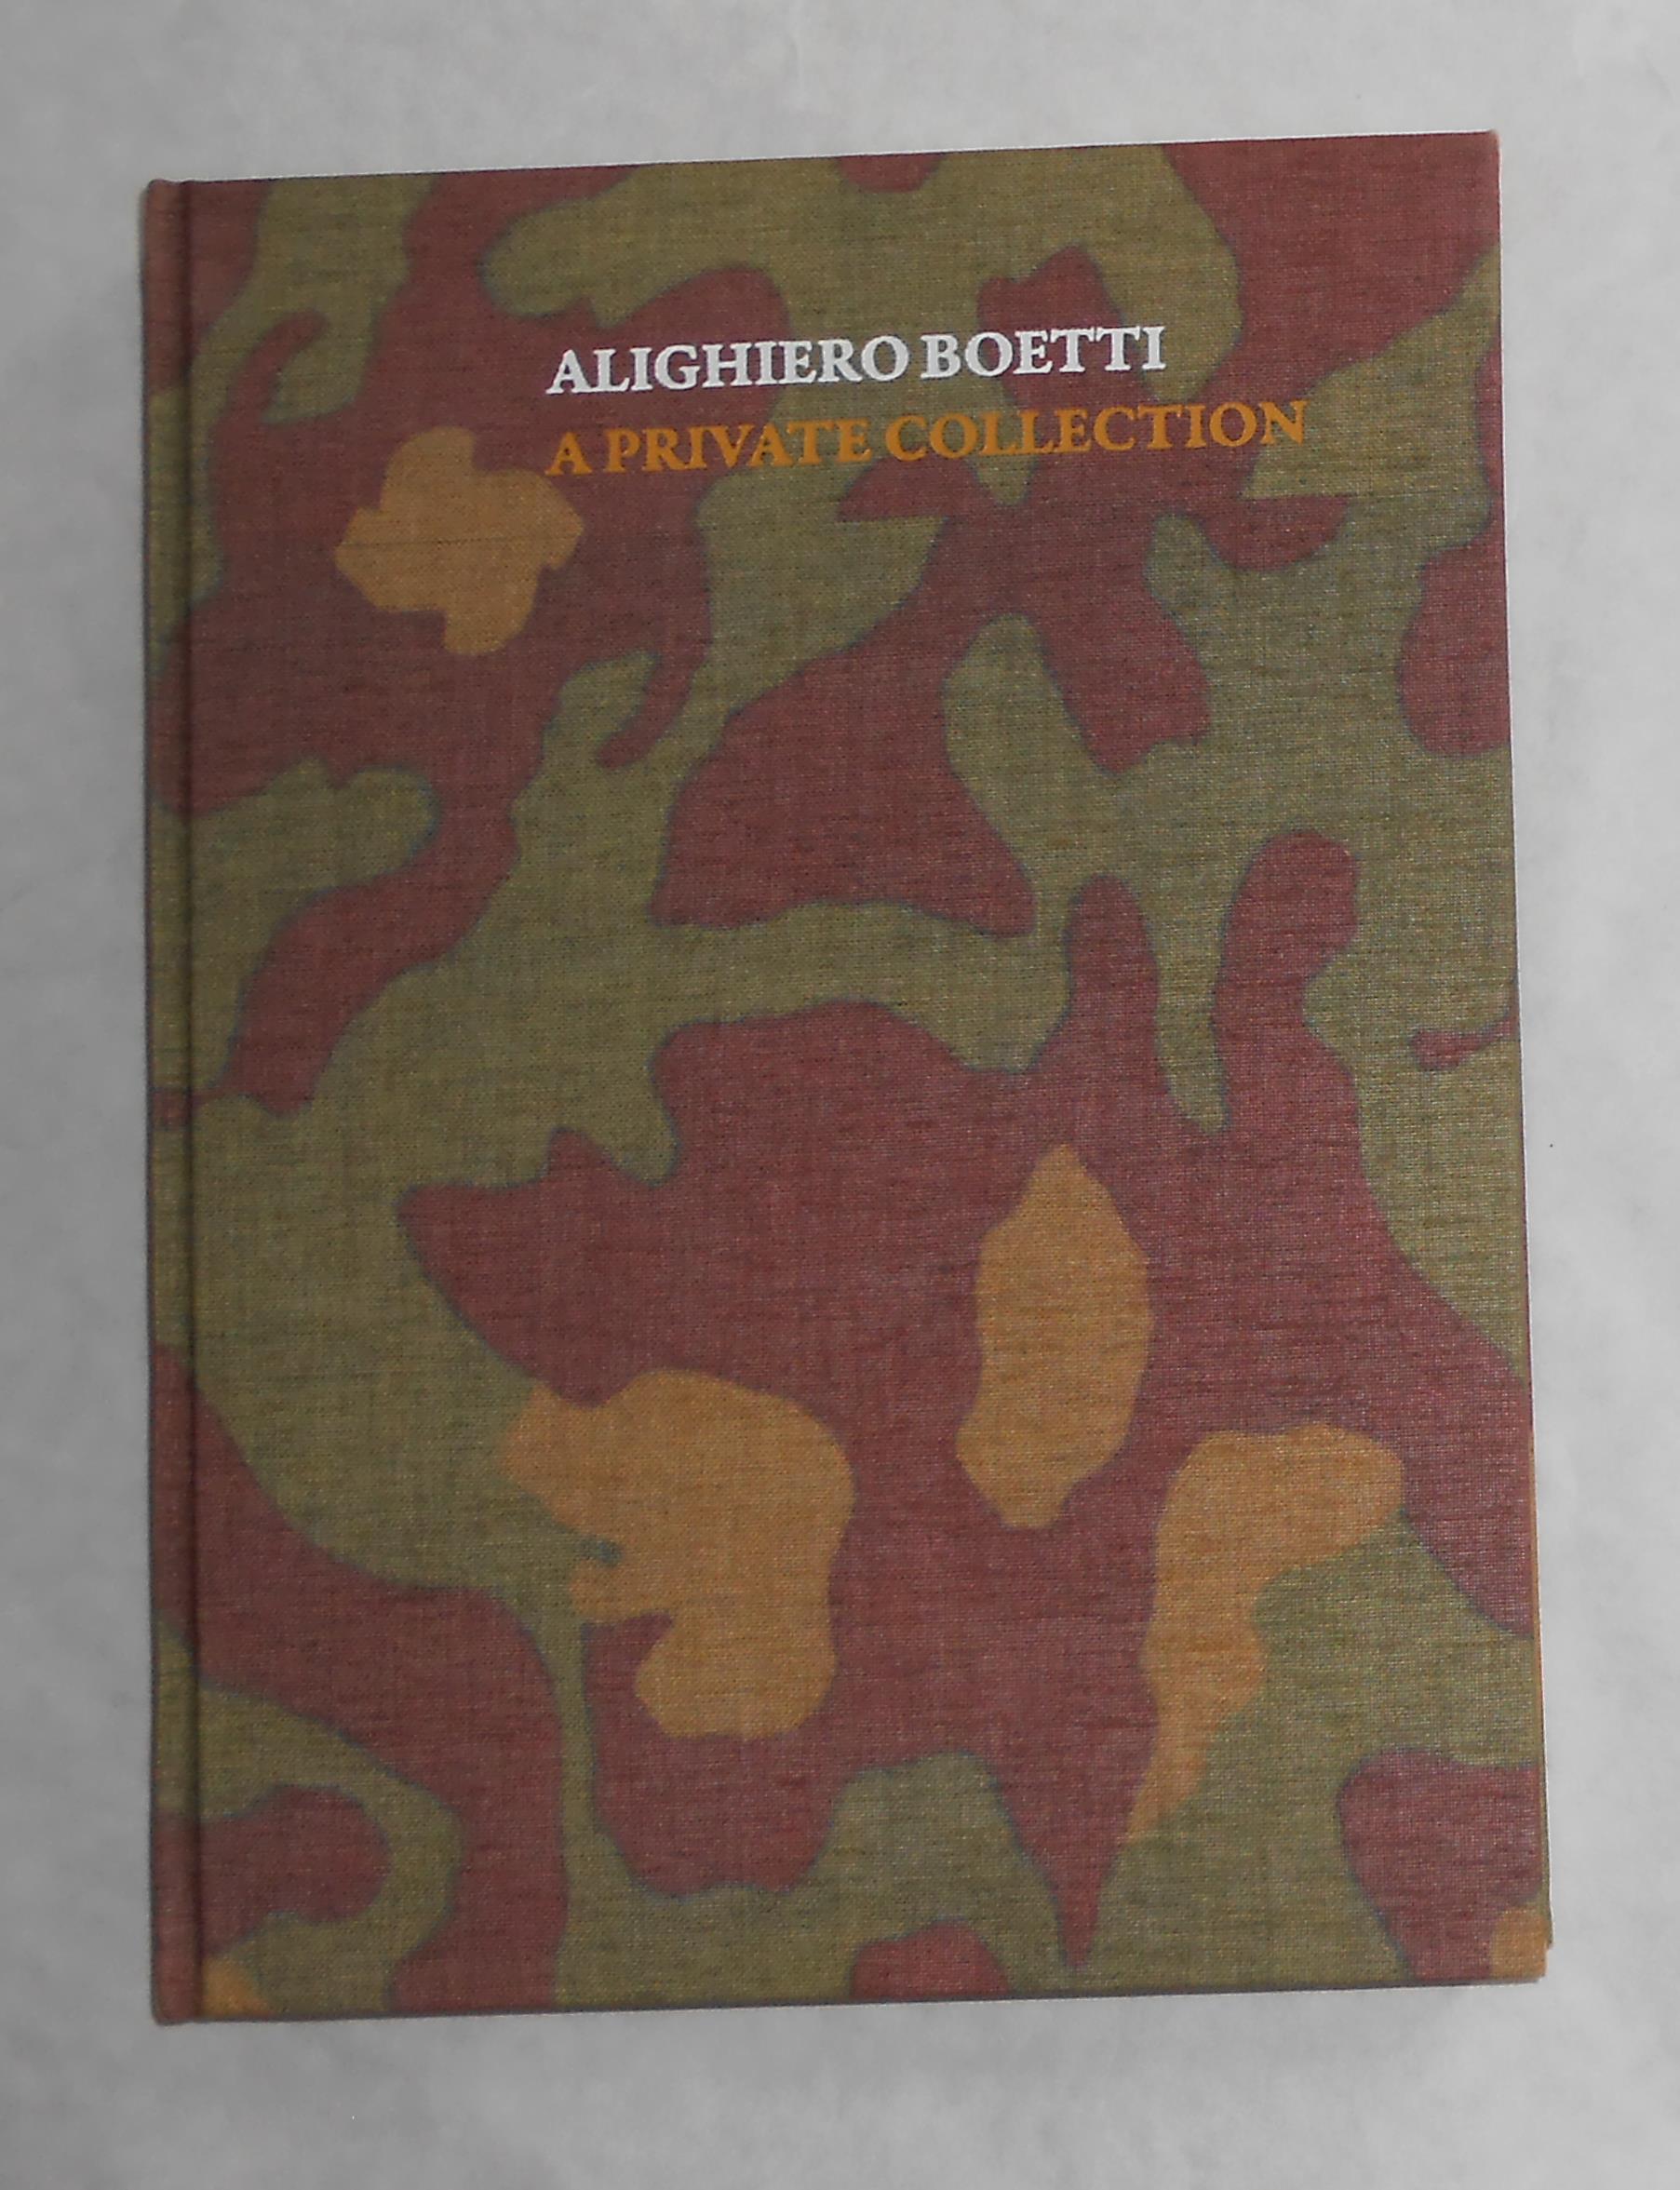 Alighiero Boetti - A Private Collection (Luxembourg & Dayan, London 13 October - 12 December 2015) - BOETTI, Alighiero ] Jean Christophe Ammann (essay)